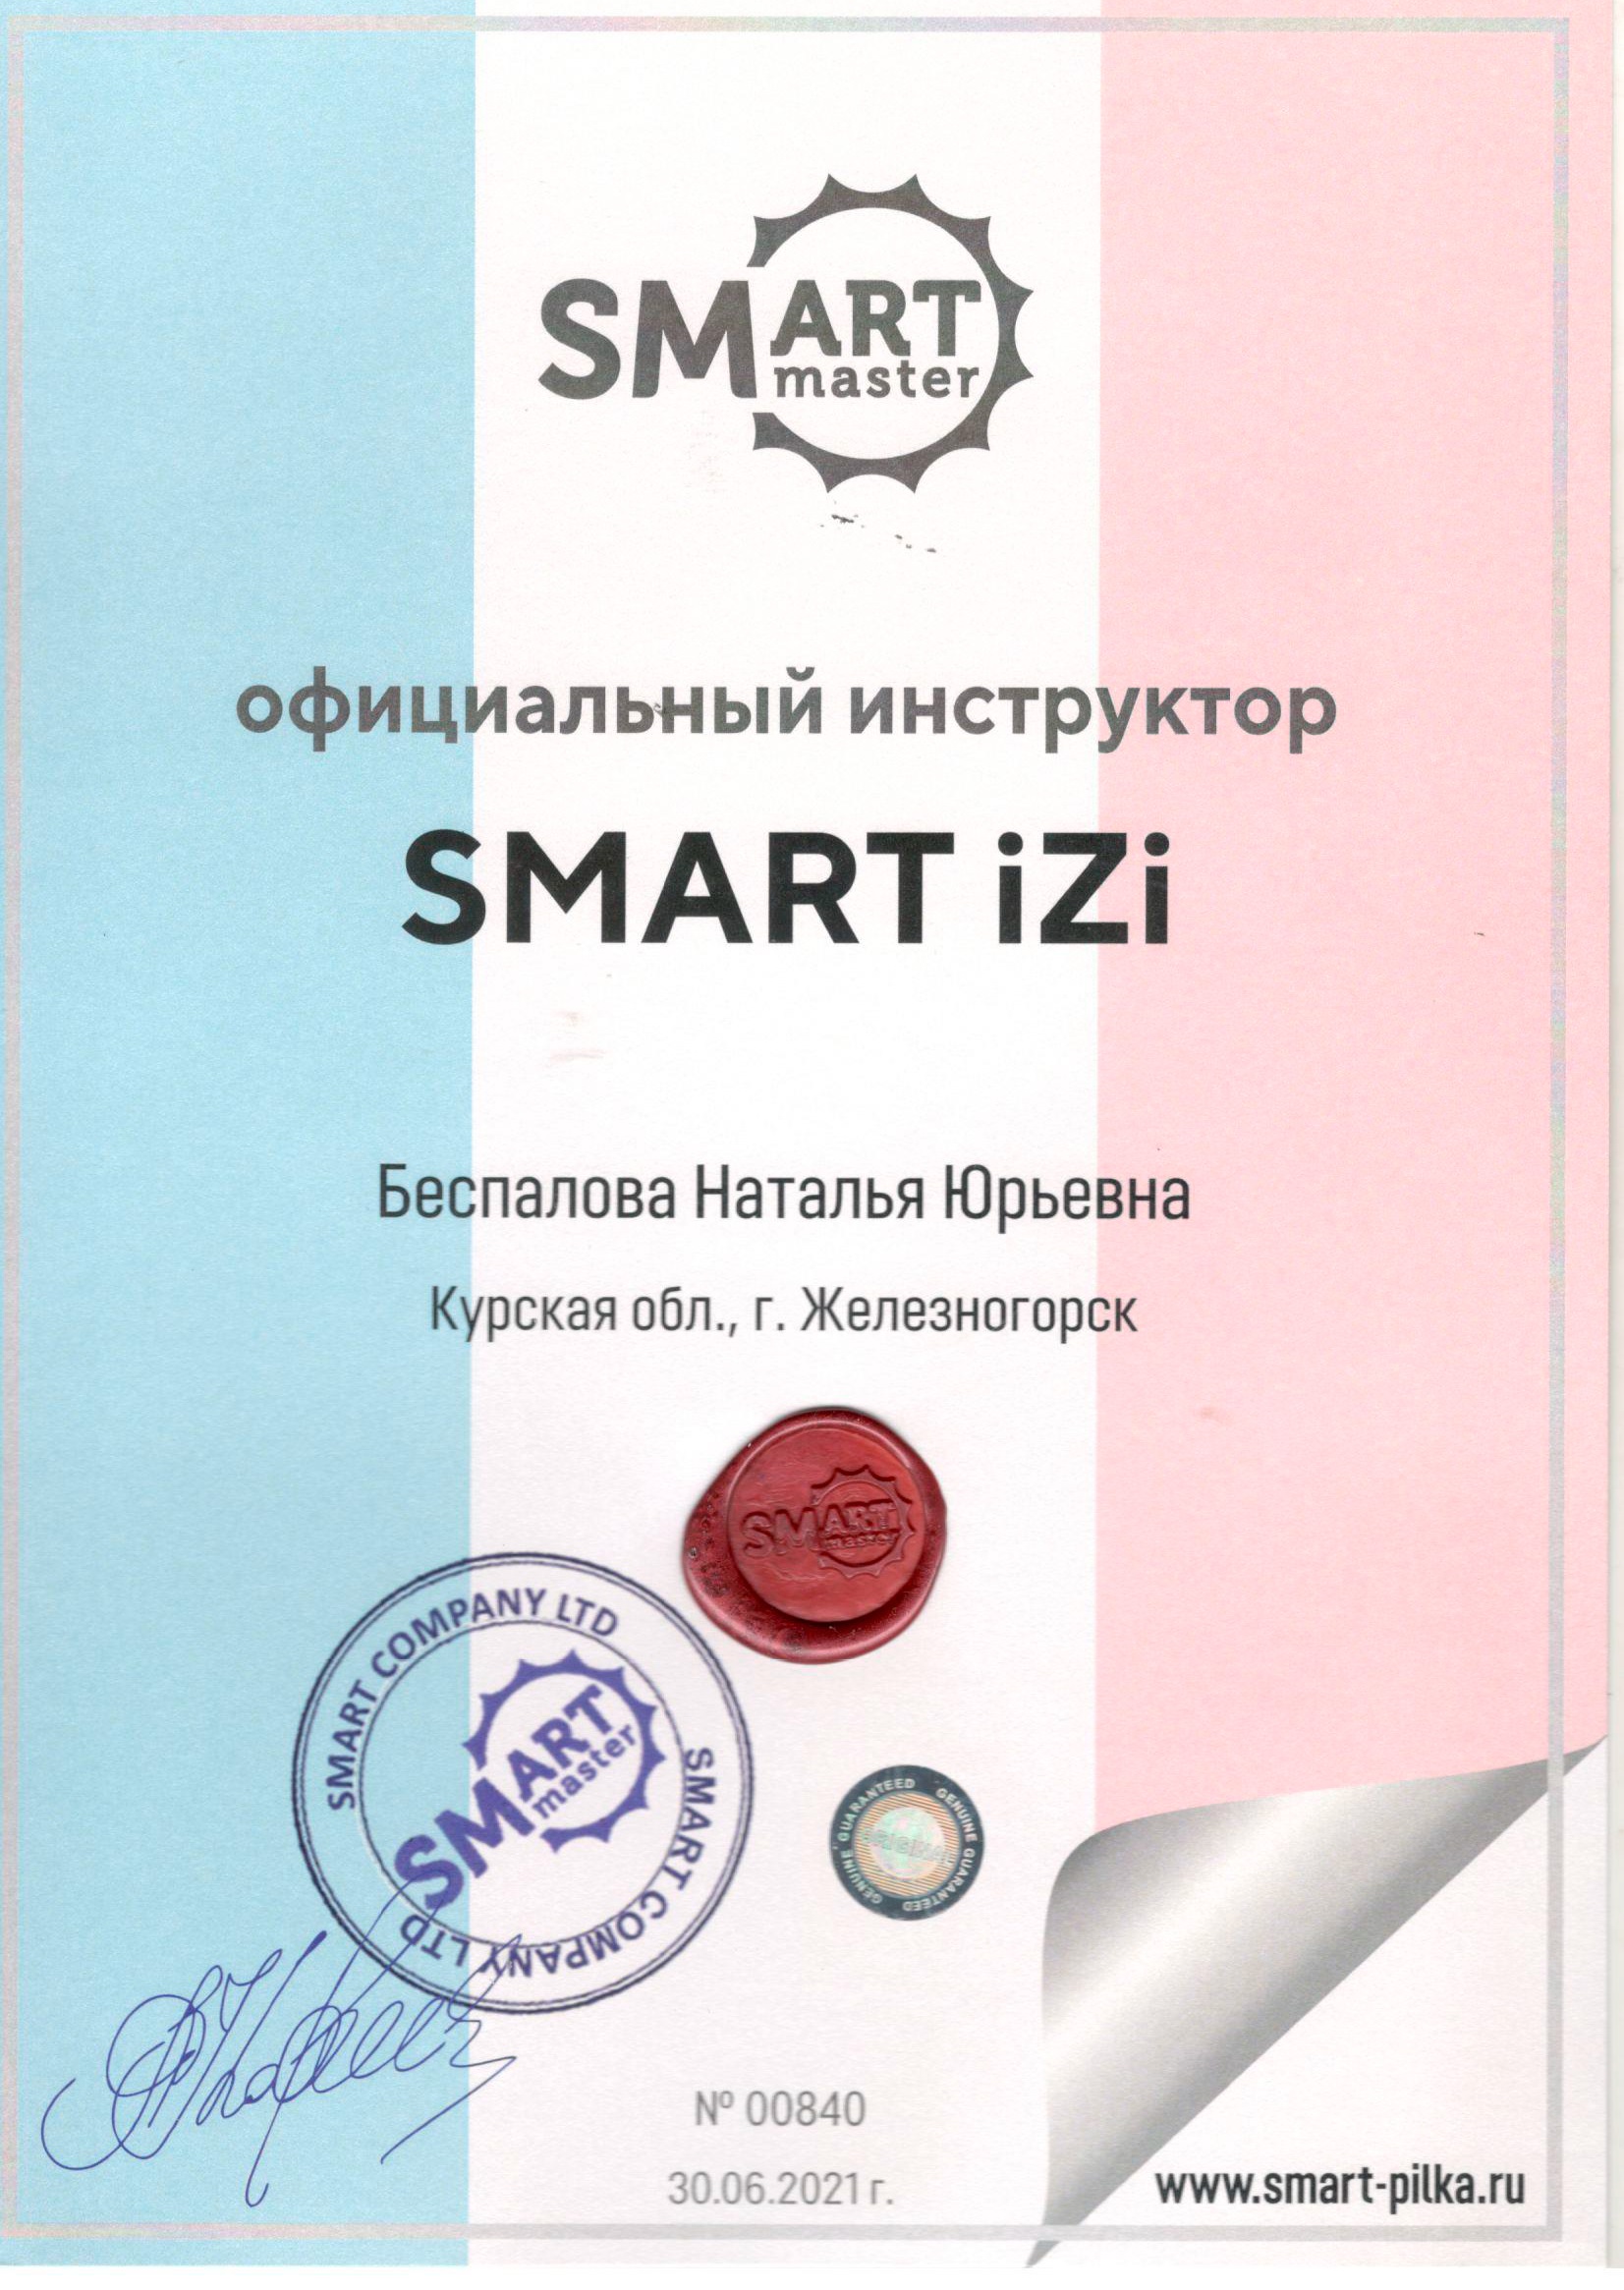 2021, Smart Master «официальный инструктор SМART IZI »